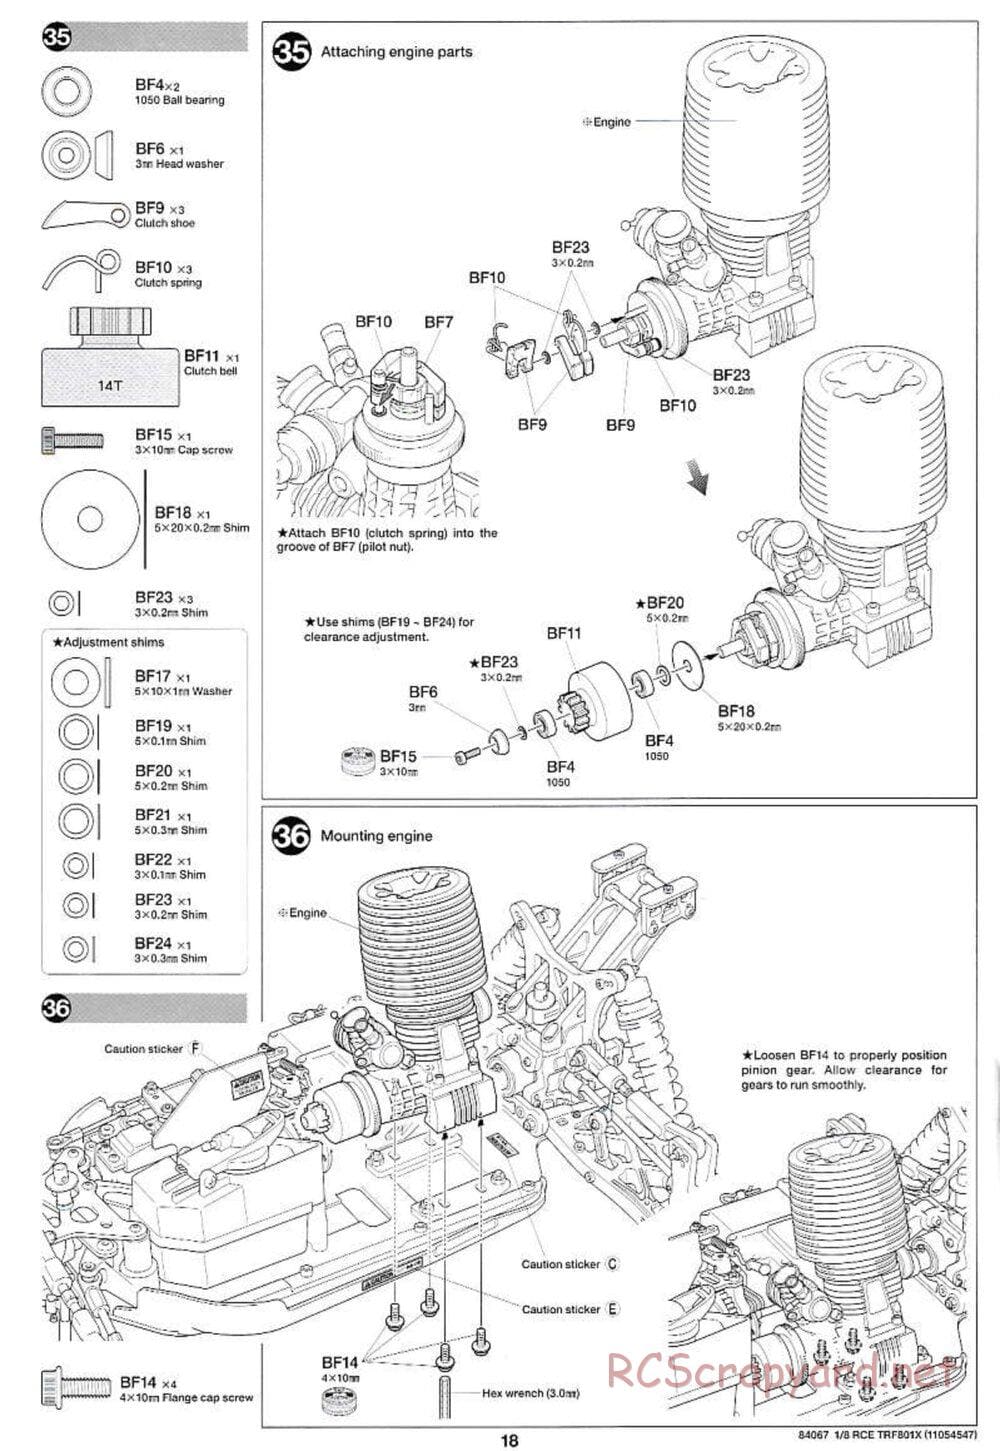 Tamiya - TRF801X Chassis - Manual - Page 18